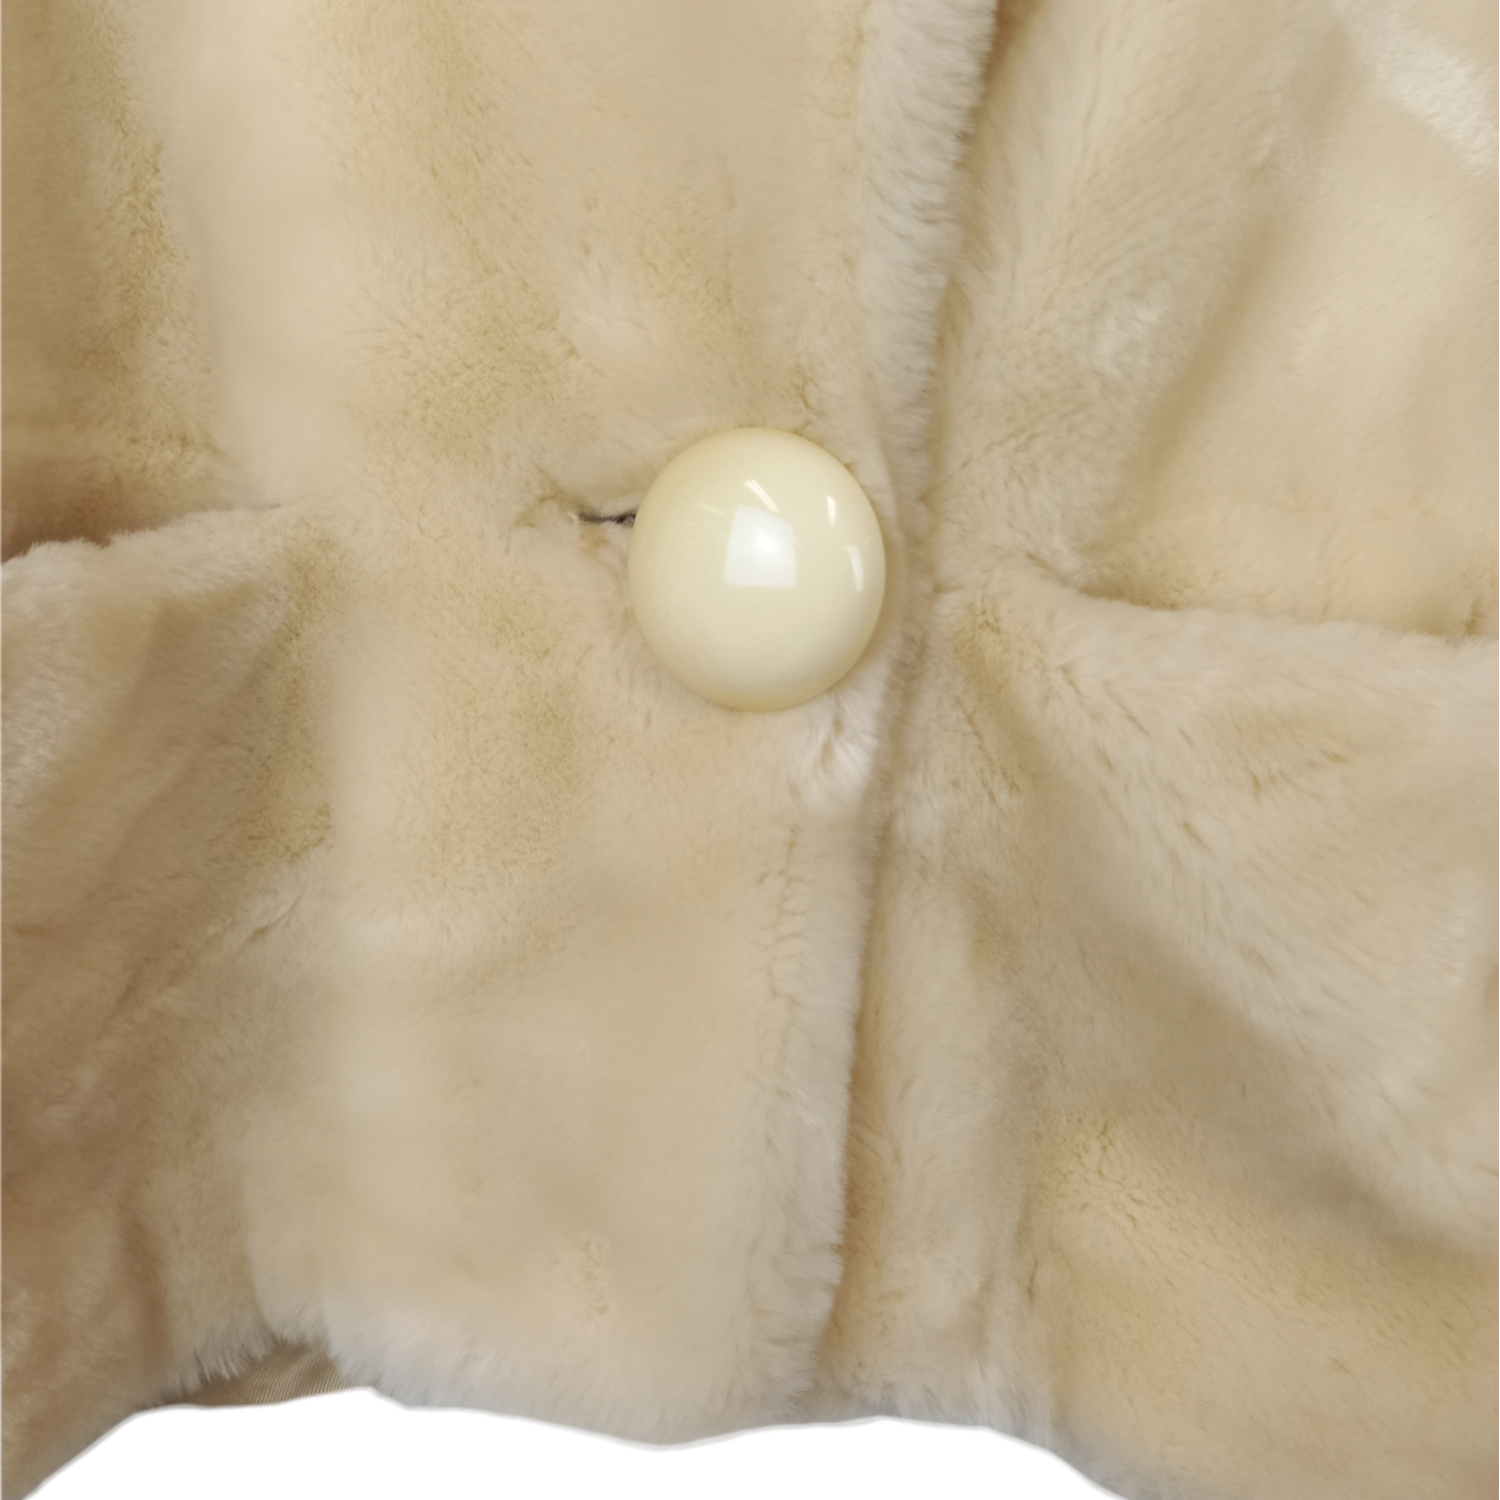 Ivory Faux Fur Coat